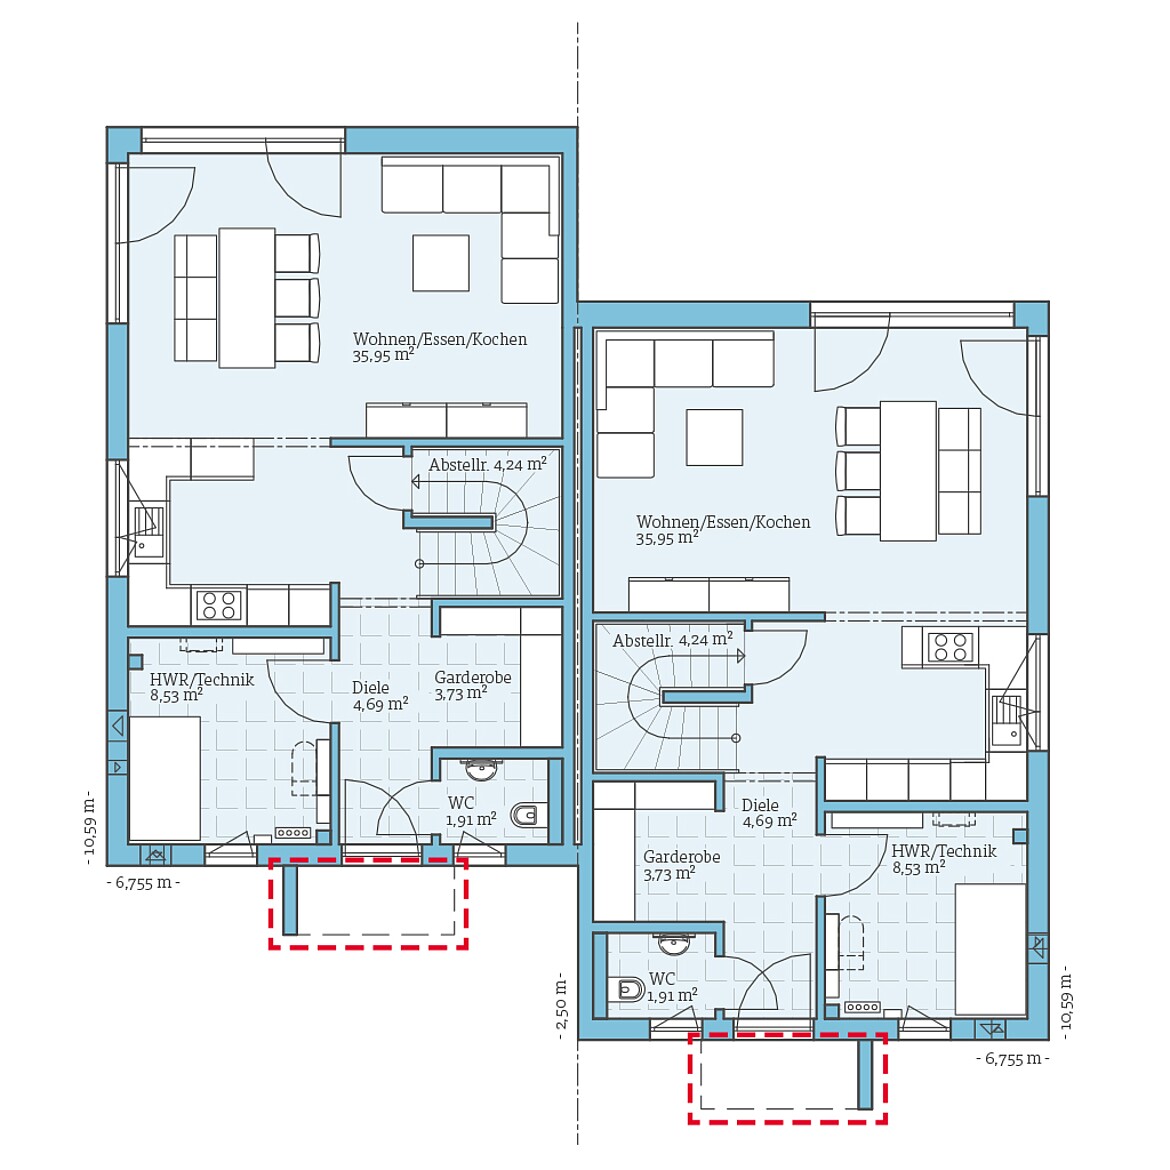 Prefabricated semi-detached house 164: Ground floor plan option